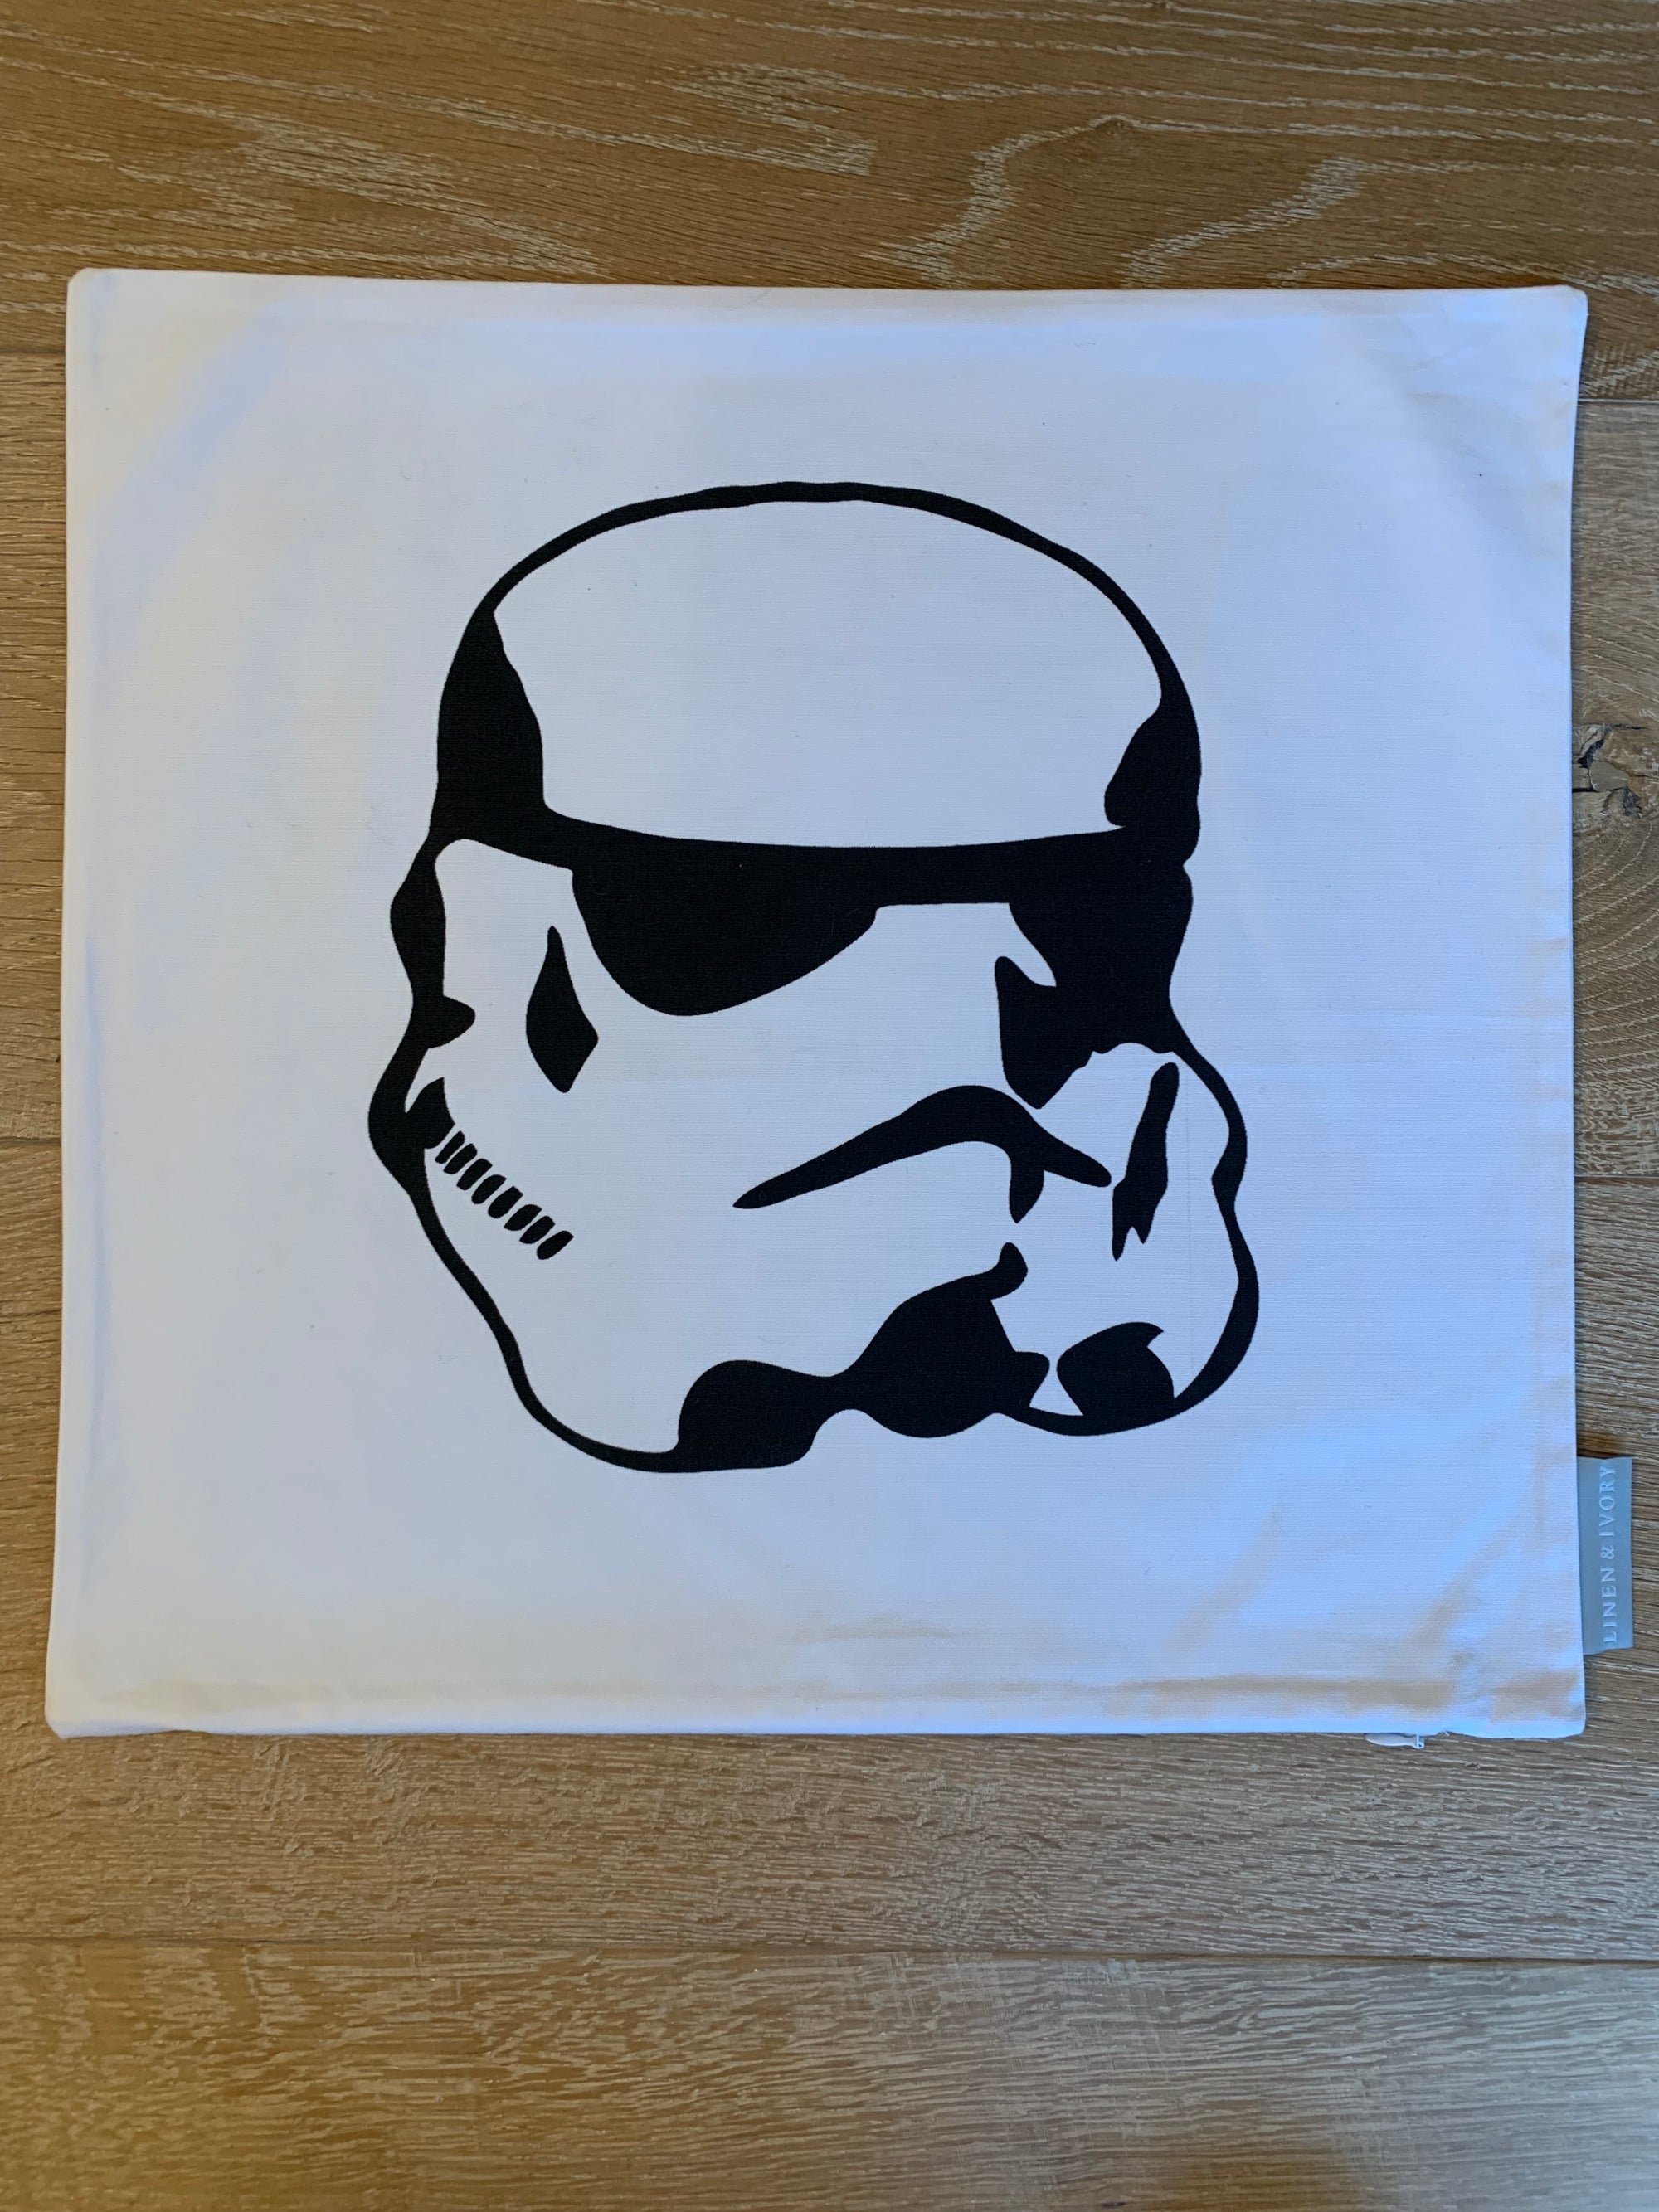 SALE "SECOND" 18" Storm Trooper (White Canvas)